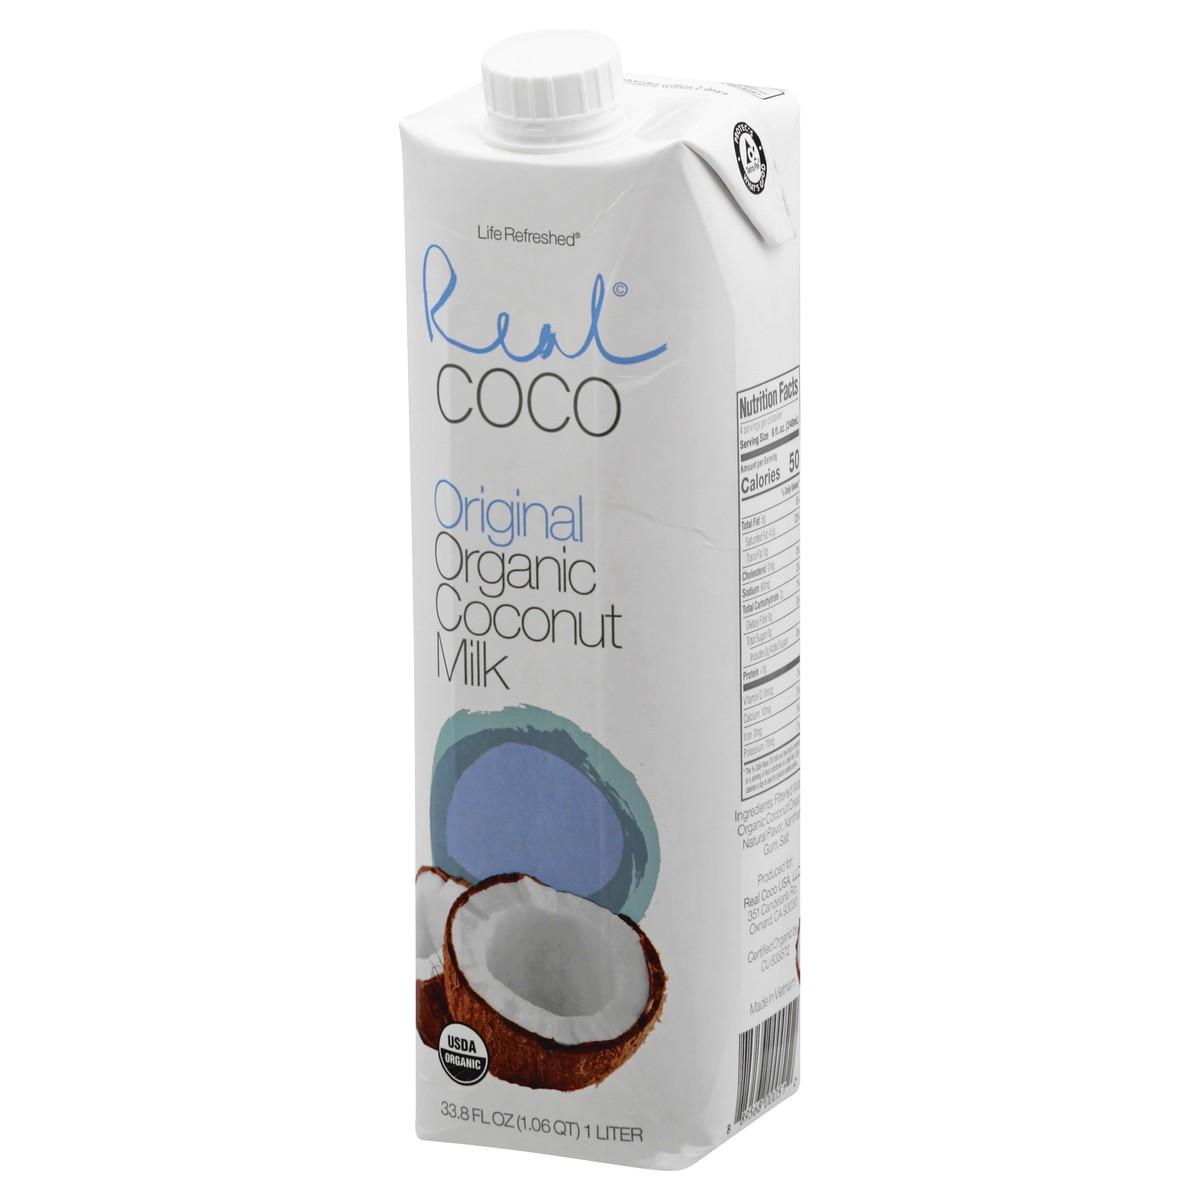 slide 10 of 13, Real Coco Life Refreshed Original Organic Coconut Milk 33.8 oz, 33.8 oz